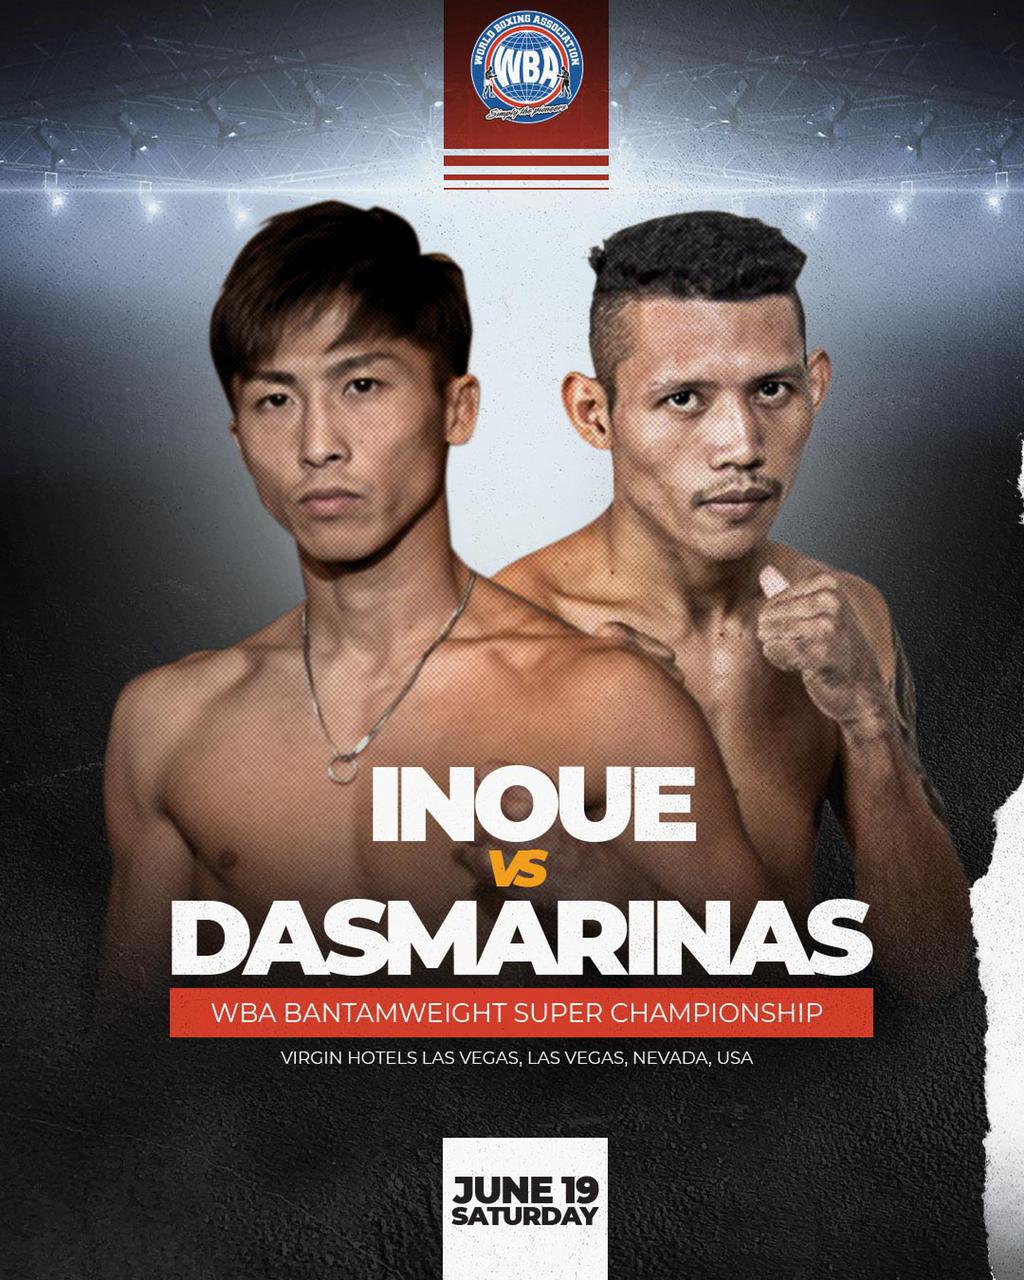 Inoue will defend against Dasmarinas on Saturday